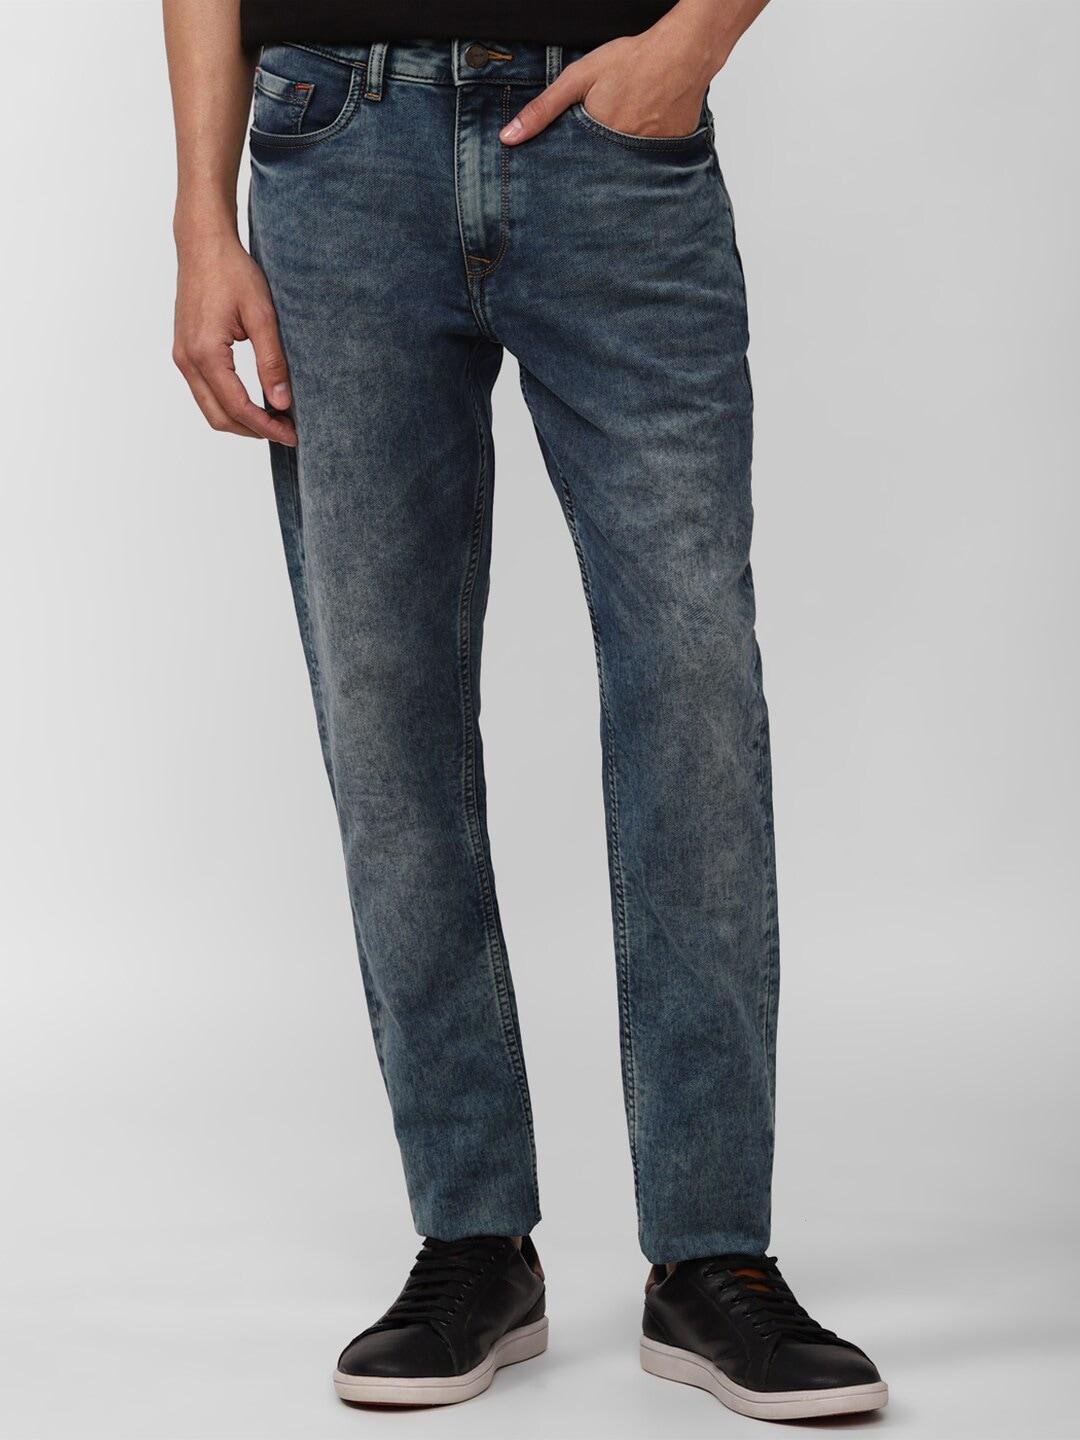 simon-carter-london-men-navy-blue-slim-fit-heavy-fade-jeans